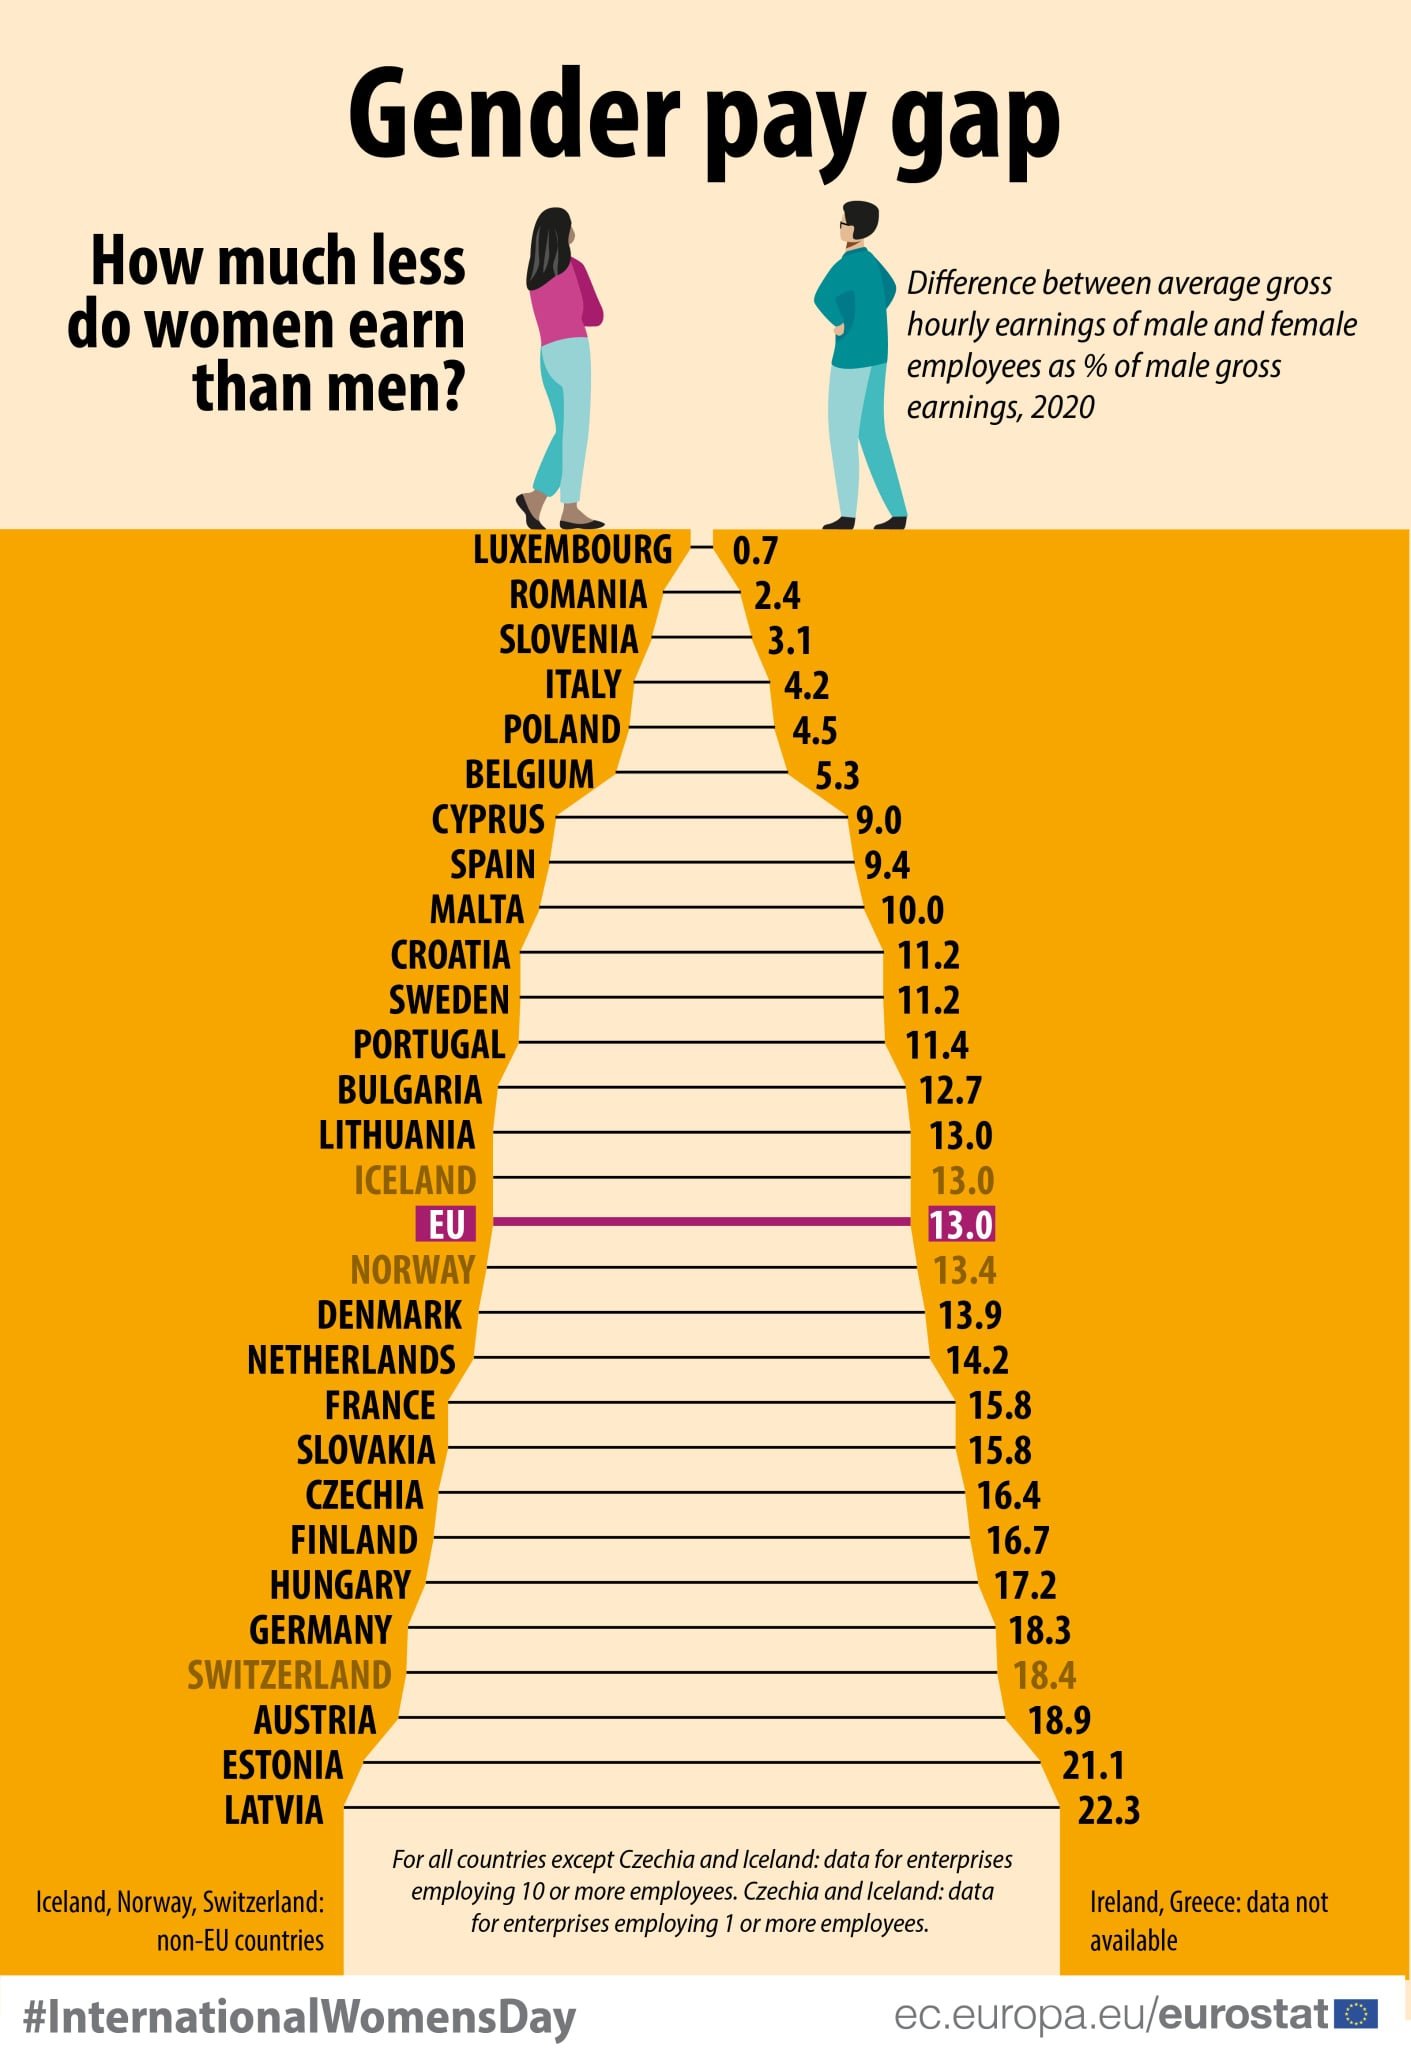 Gender Pay Gap (https://ec.europa.eu/eurostat/statistics-explained/index.php?title=Gender_pay_gap_statistics&fbclid=IwAR17C6yWcDpNdvYz0HSvUfArzMI9Ty30gS_XWGm4L8gzXU5ZjZVErHFmLUA)